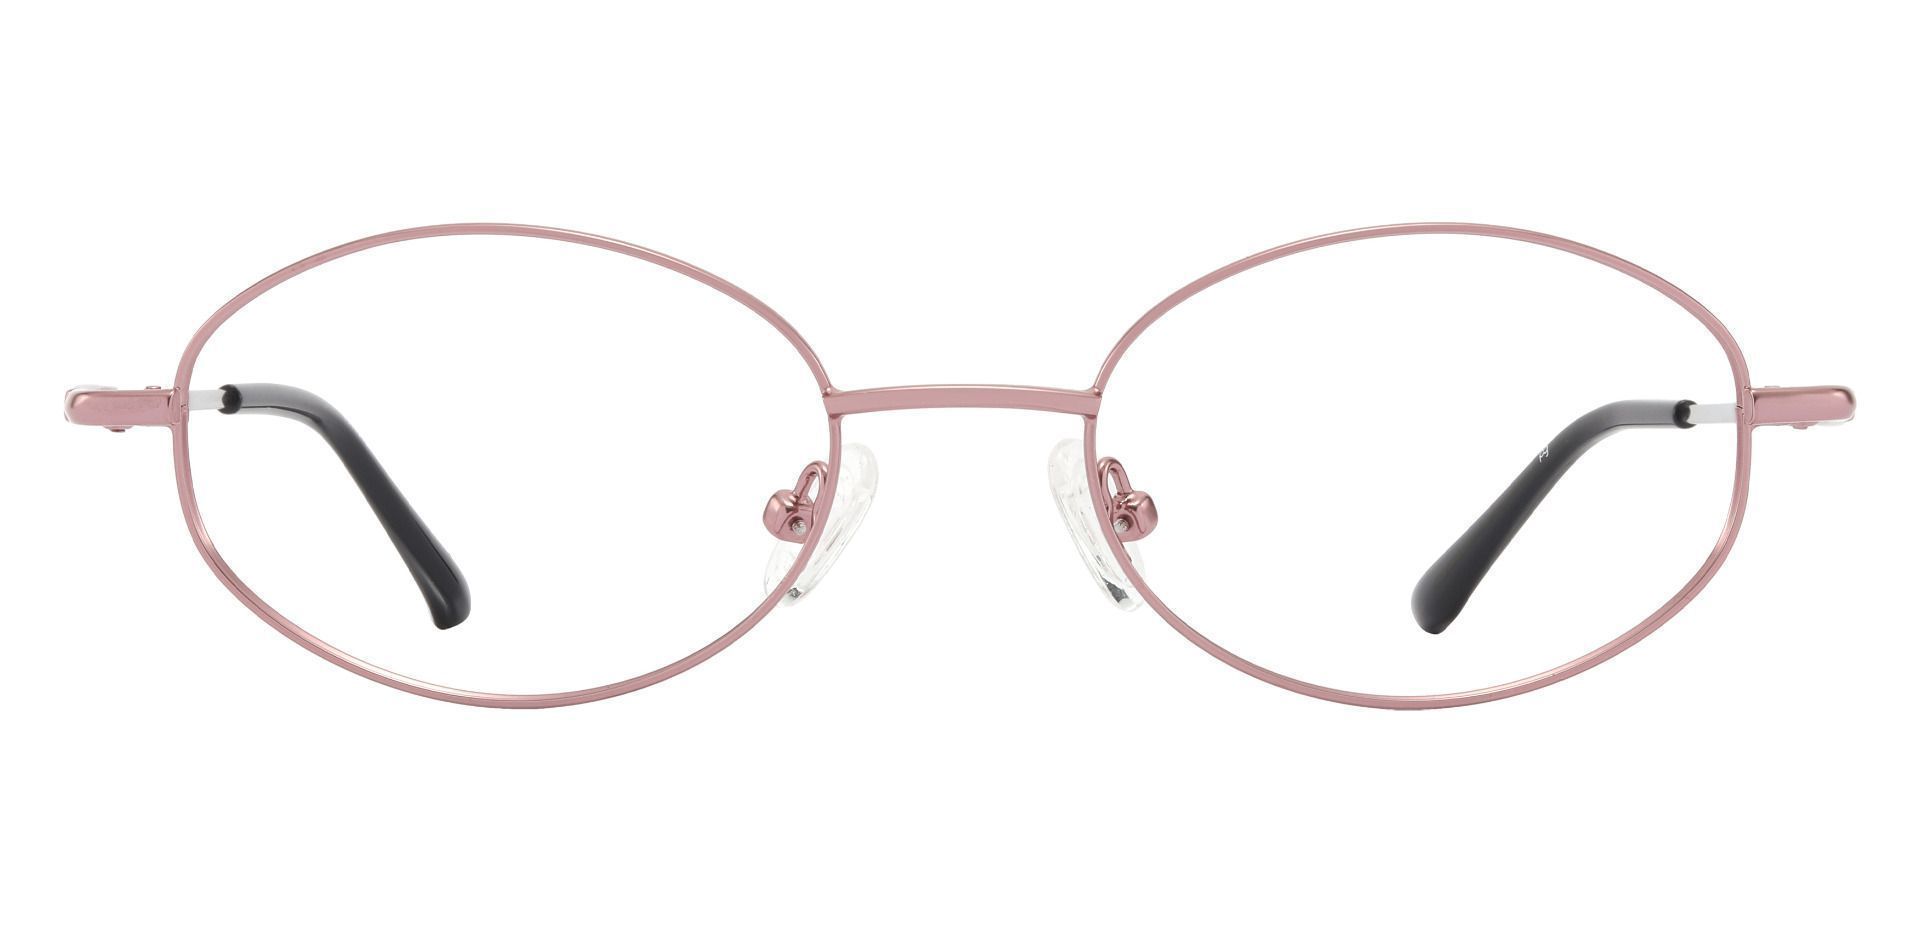 Aline Oval Prescription Glasses - Rose Gold